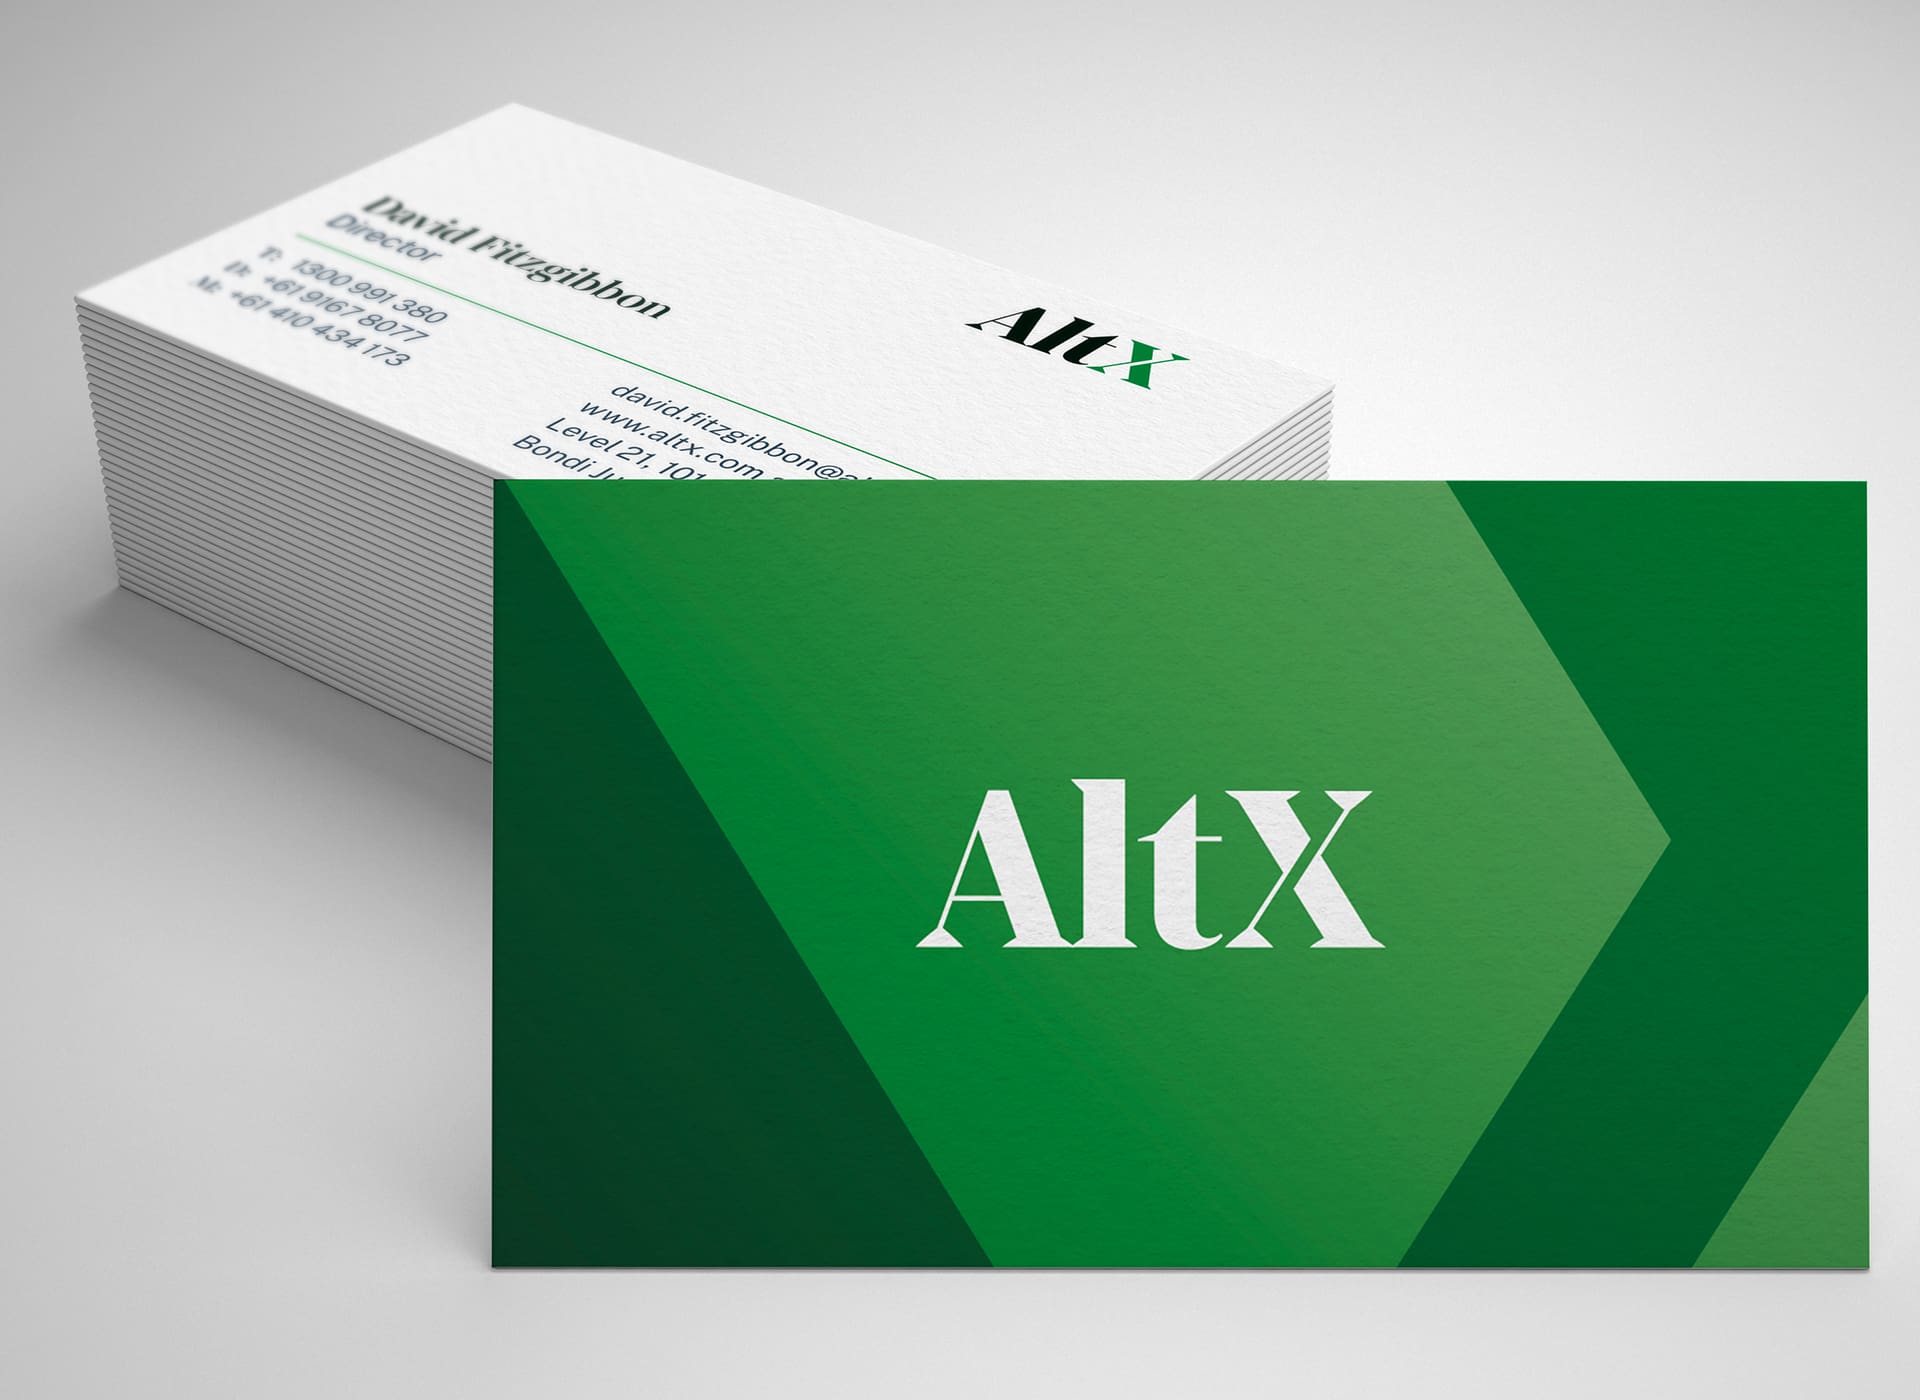 altx-brand-case-study-image07-min